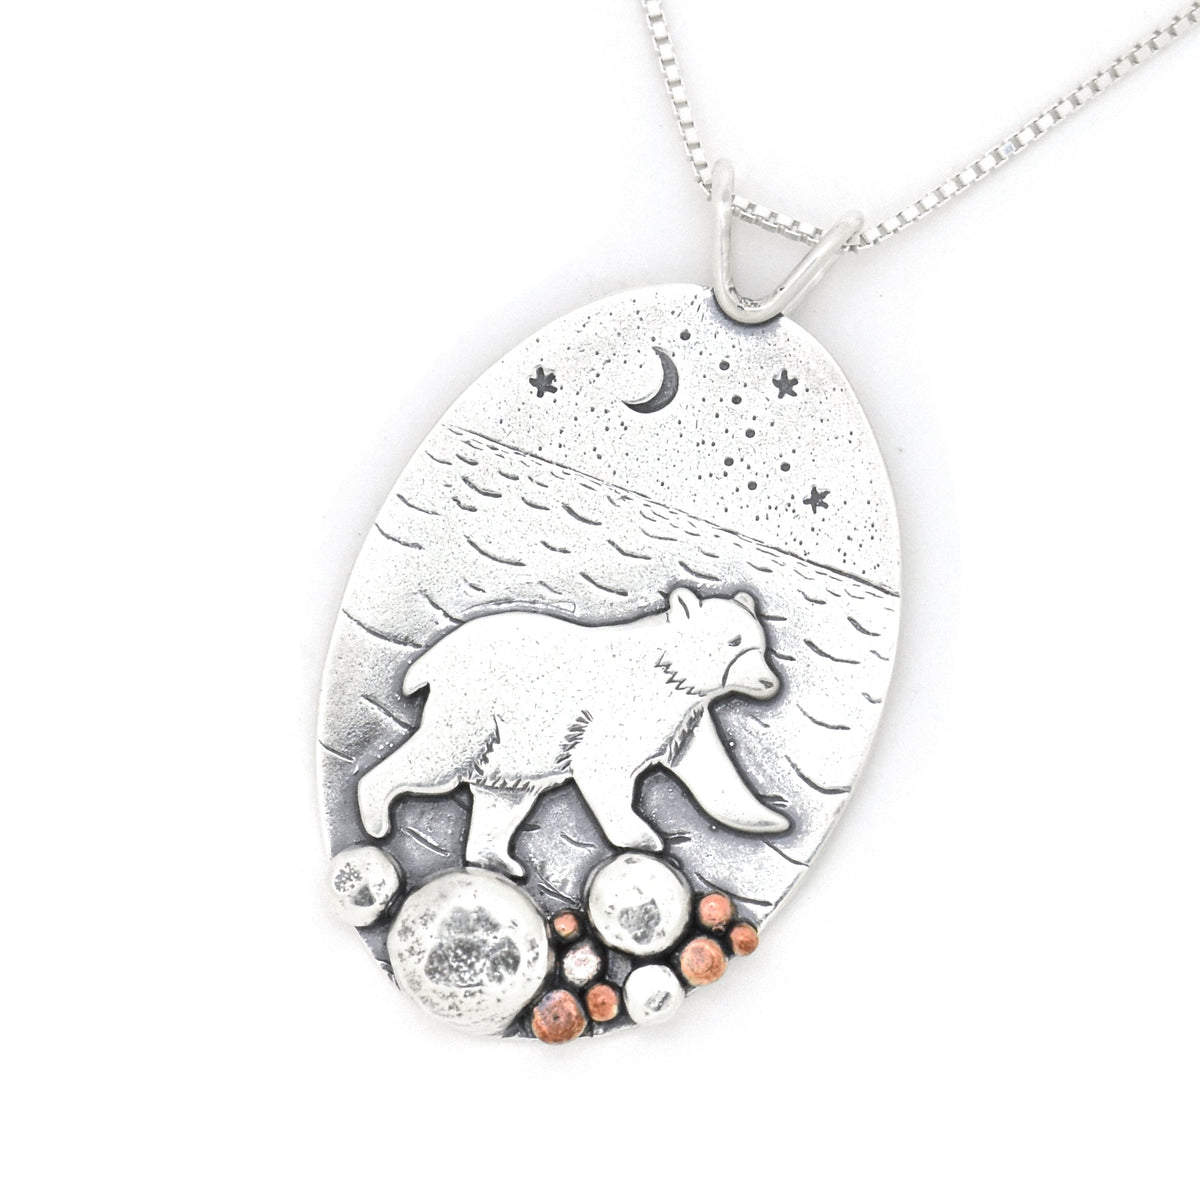 Celestial Bear Pendant - Mixed Metal Pendant   6608 - handmade by Beth Millner Jewelry